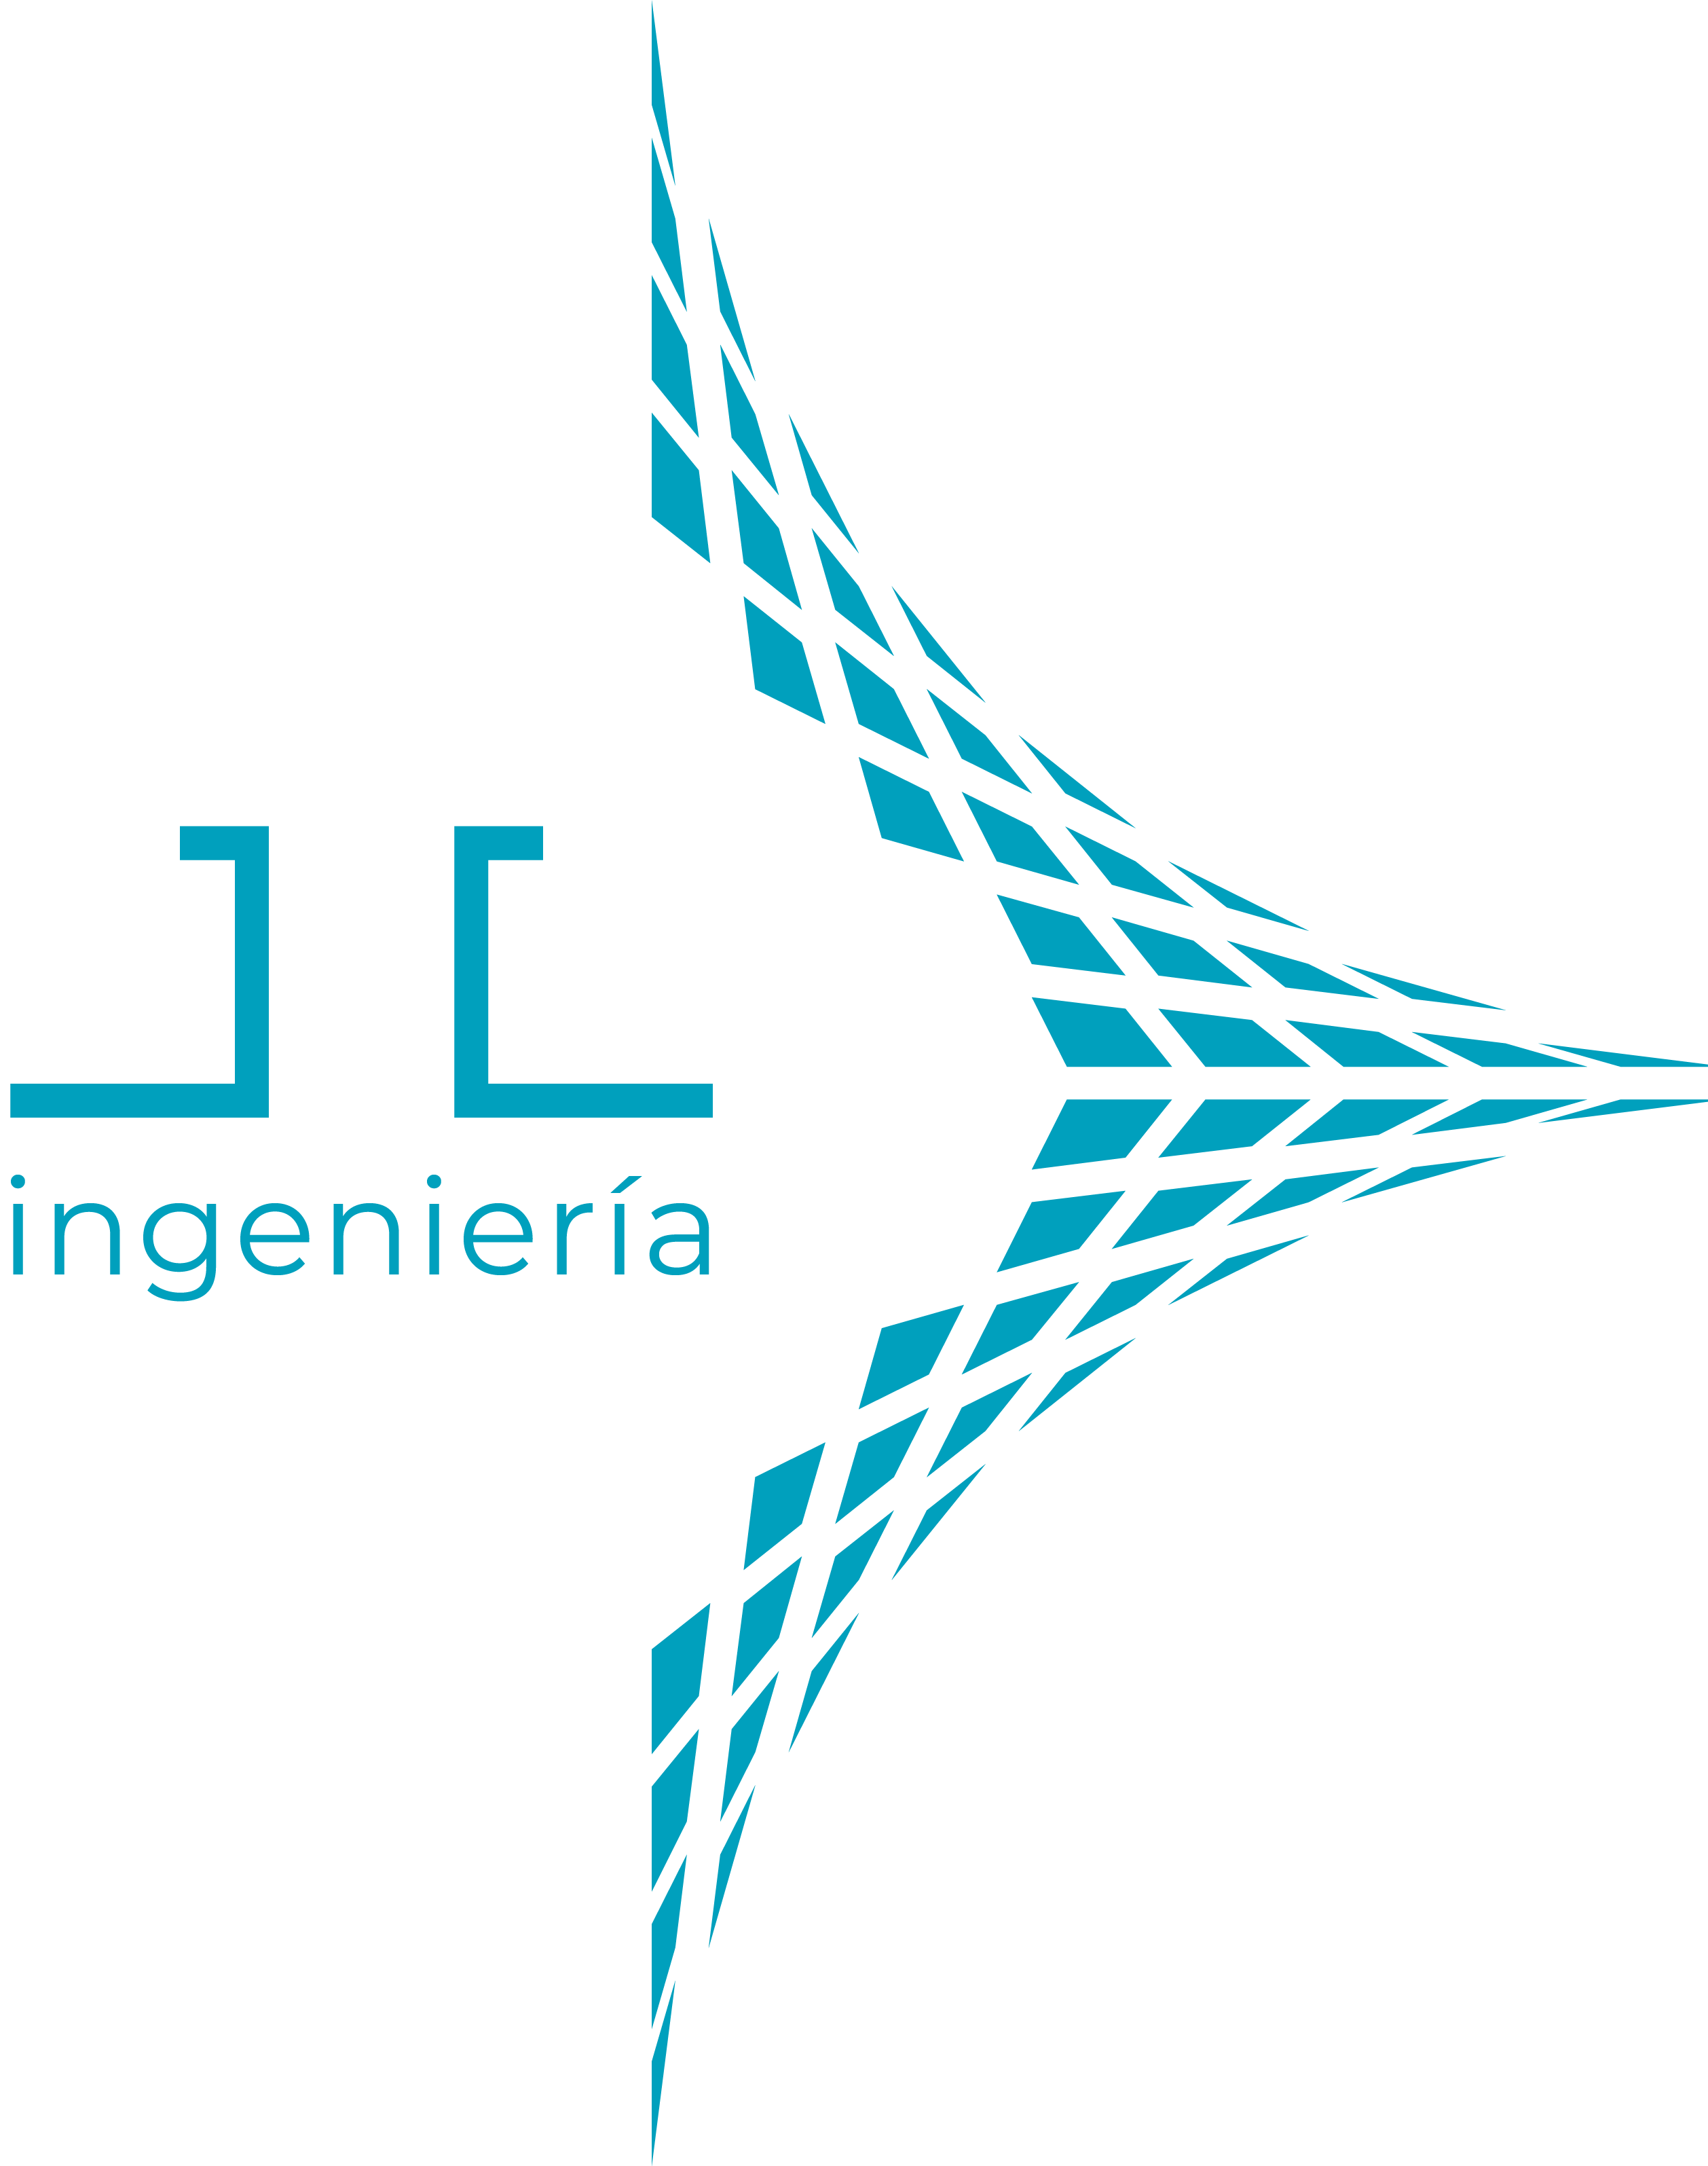 JL Ingenieria